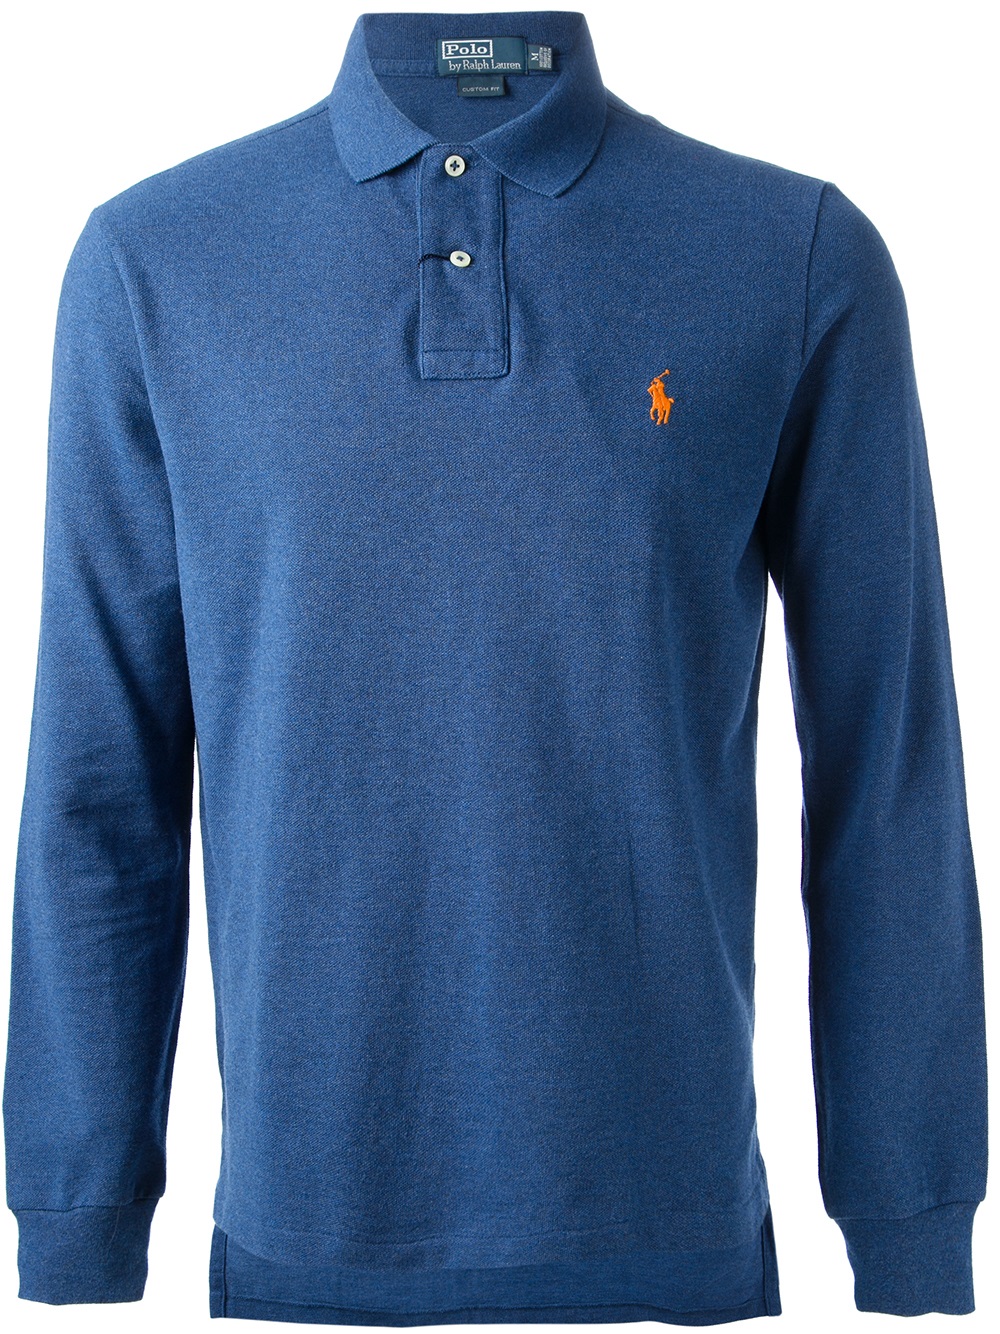 Lyst - Ralph Lauren Blue Label Long Sleeve Polo Shirt in Blue for Men